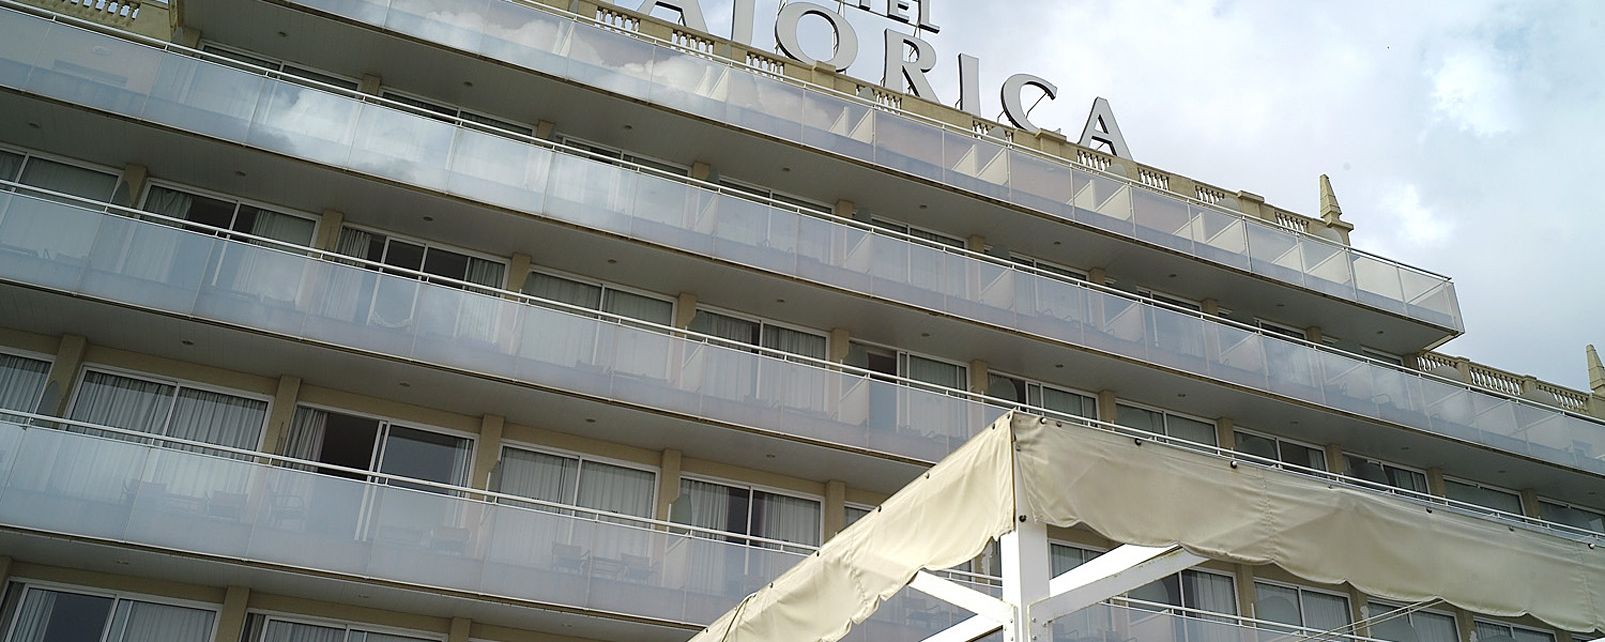 Hotel Catalonia Majorica